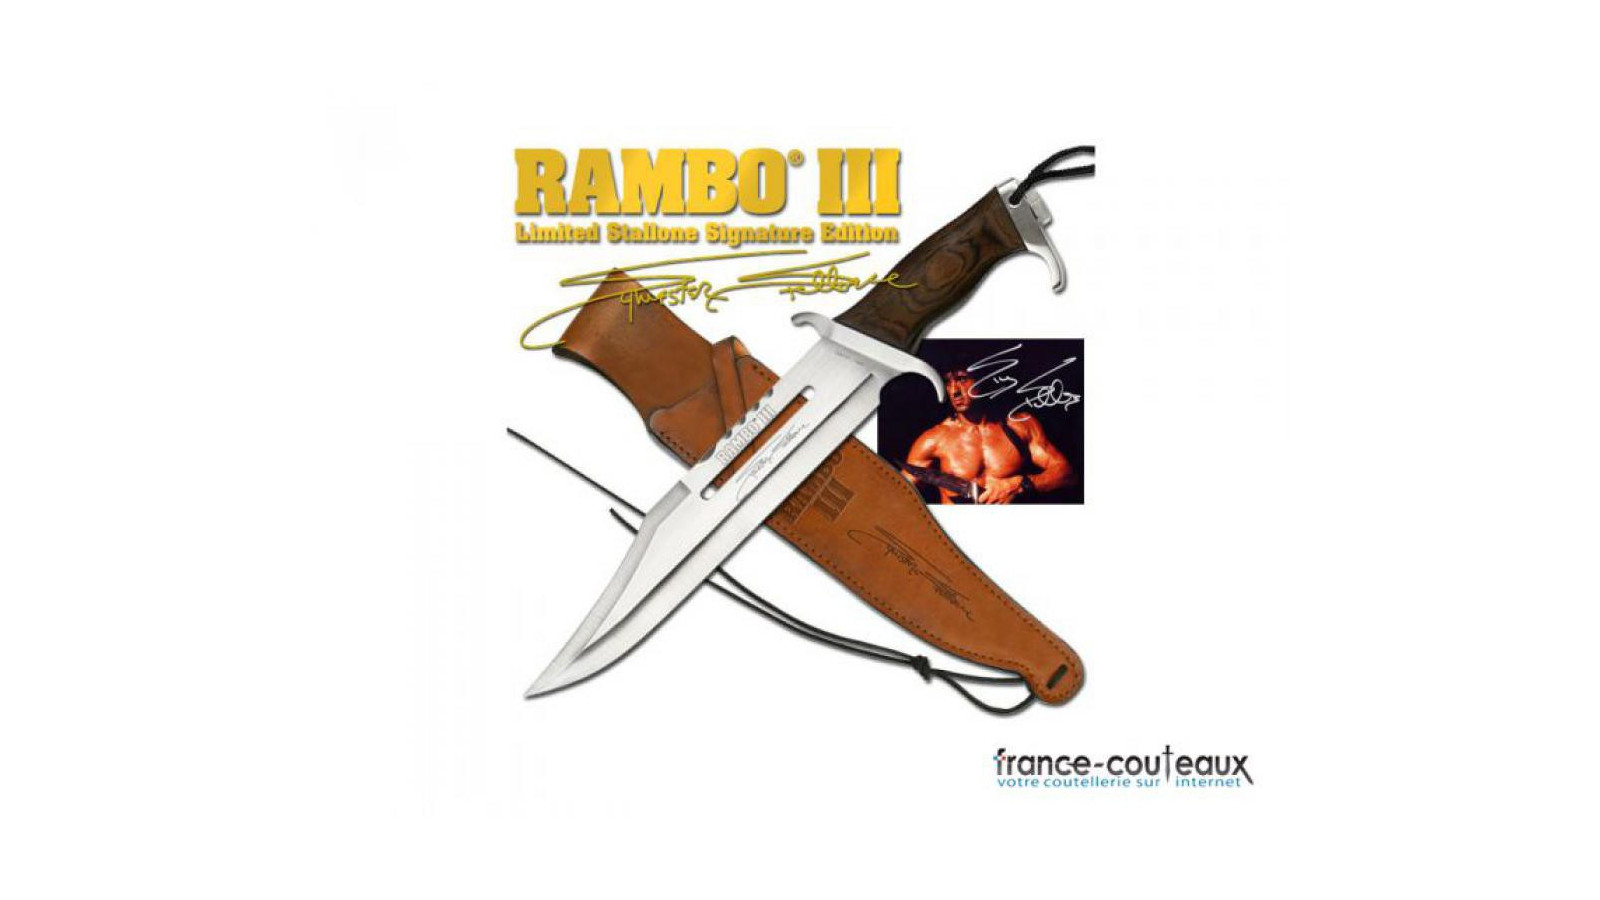 Poignard Rambo III - Sylverster Stallone Signature Edition